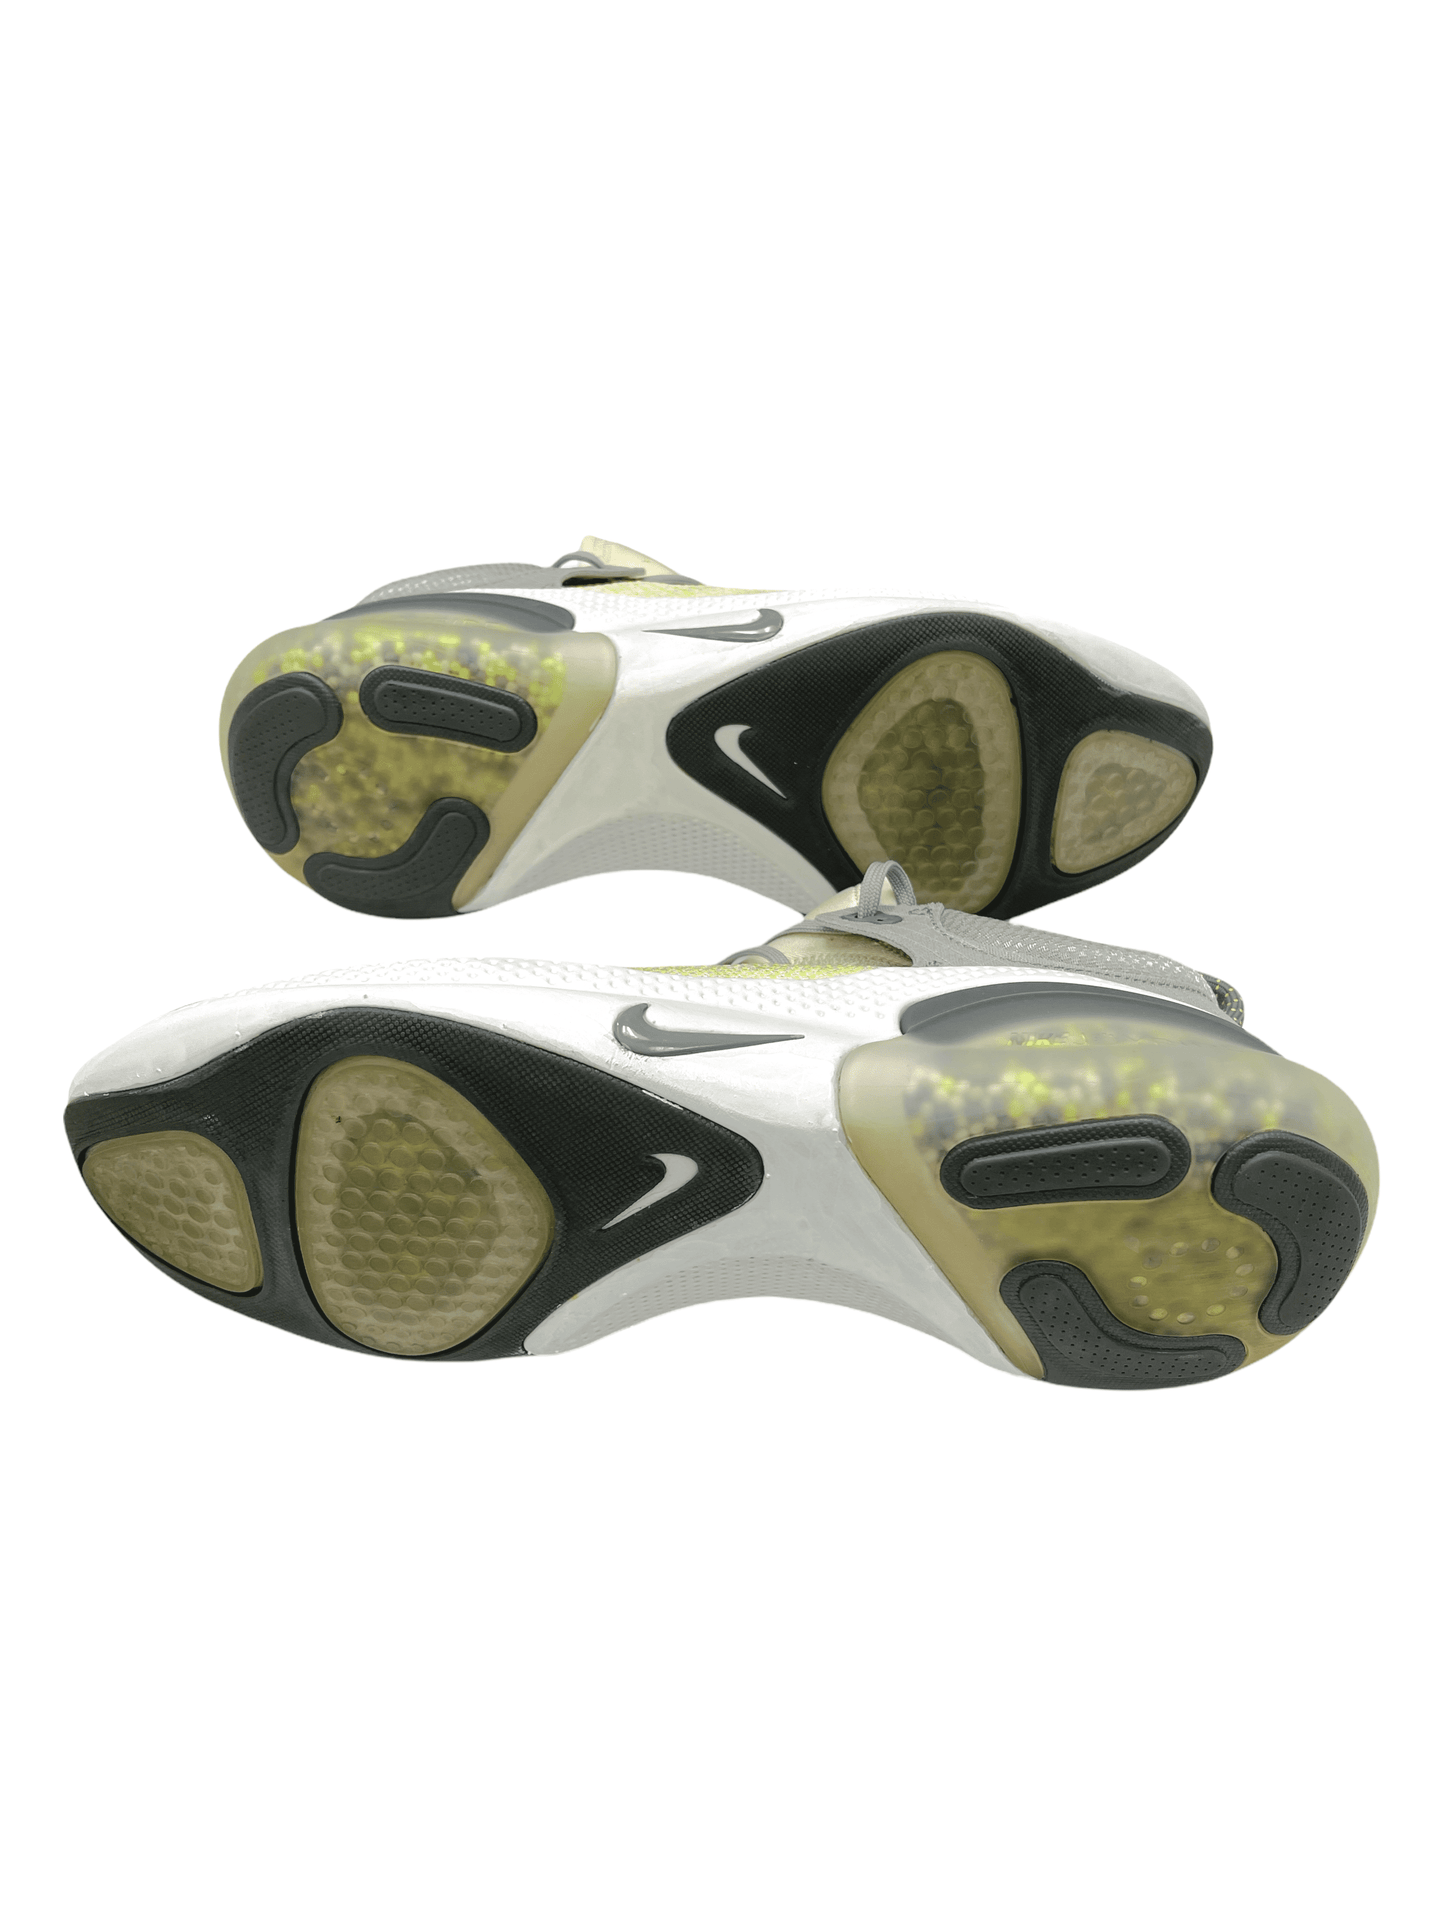 Nike Joyride Run Flyknit Sail Sneakers 10.5 US